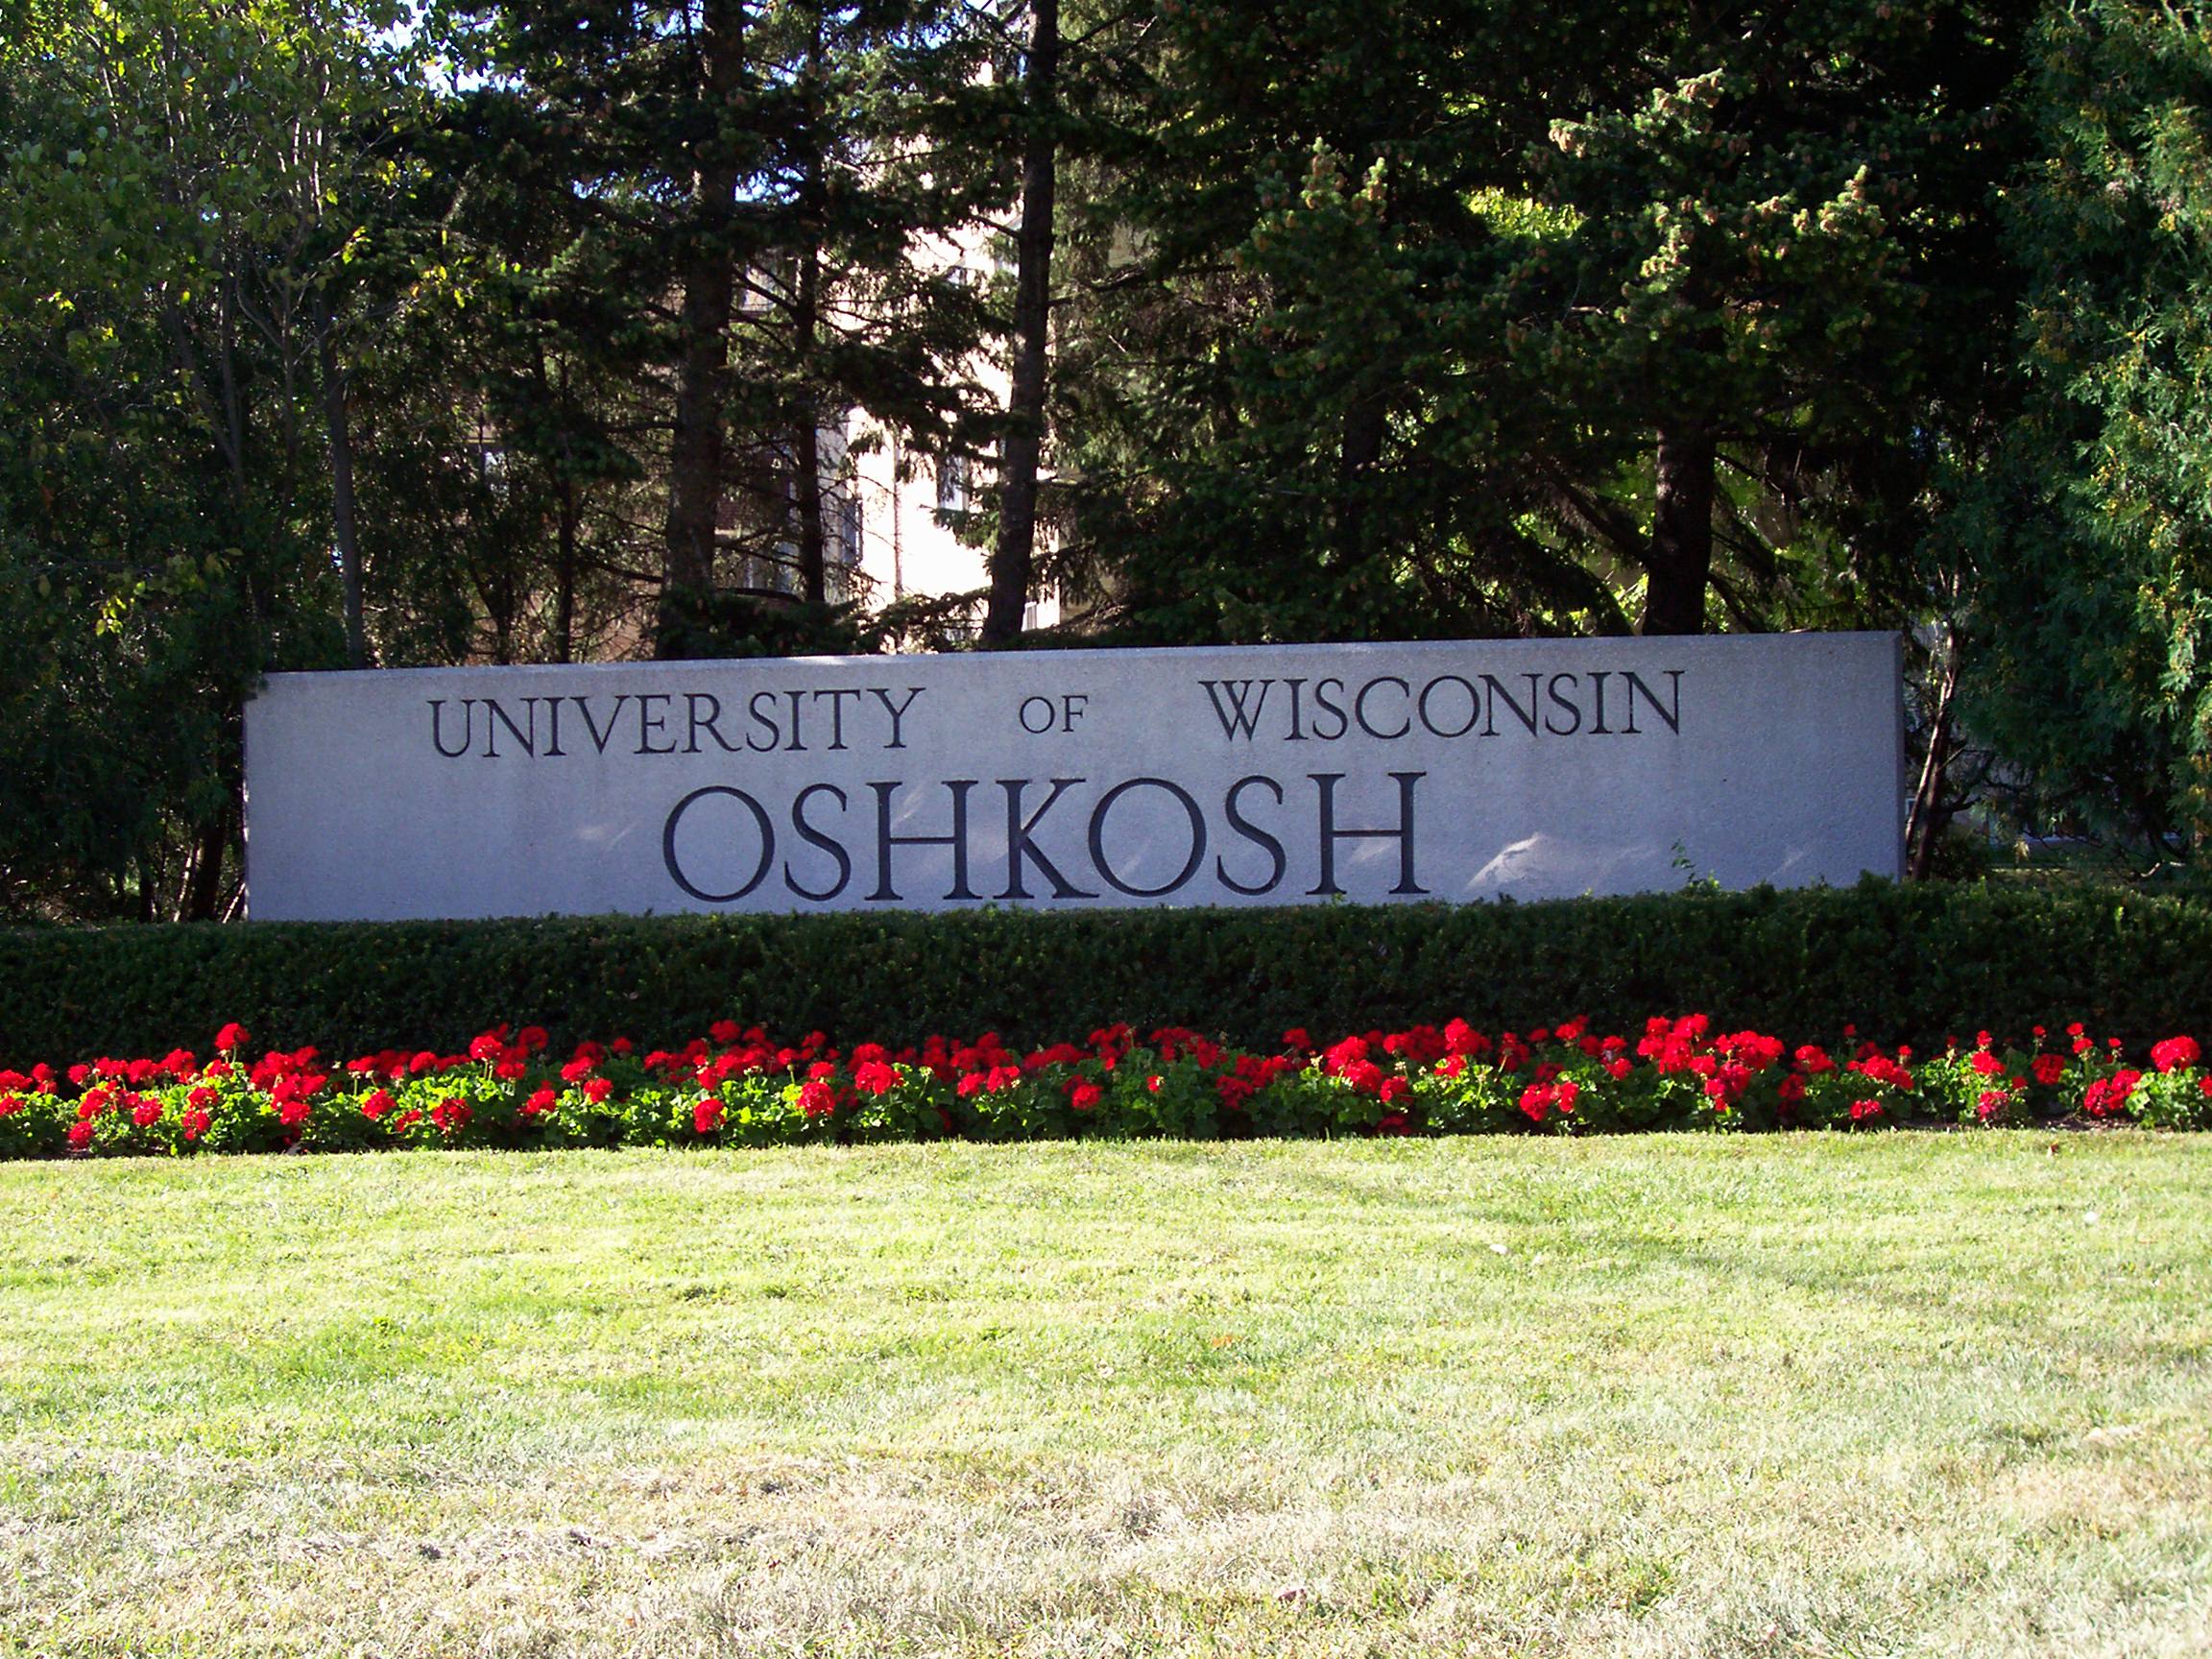 UW-Oshkosh faces $18M deficit, plans to cut 200 staff positions